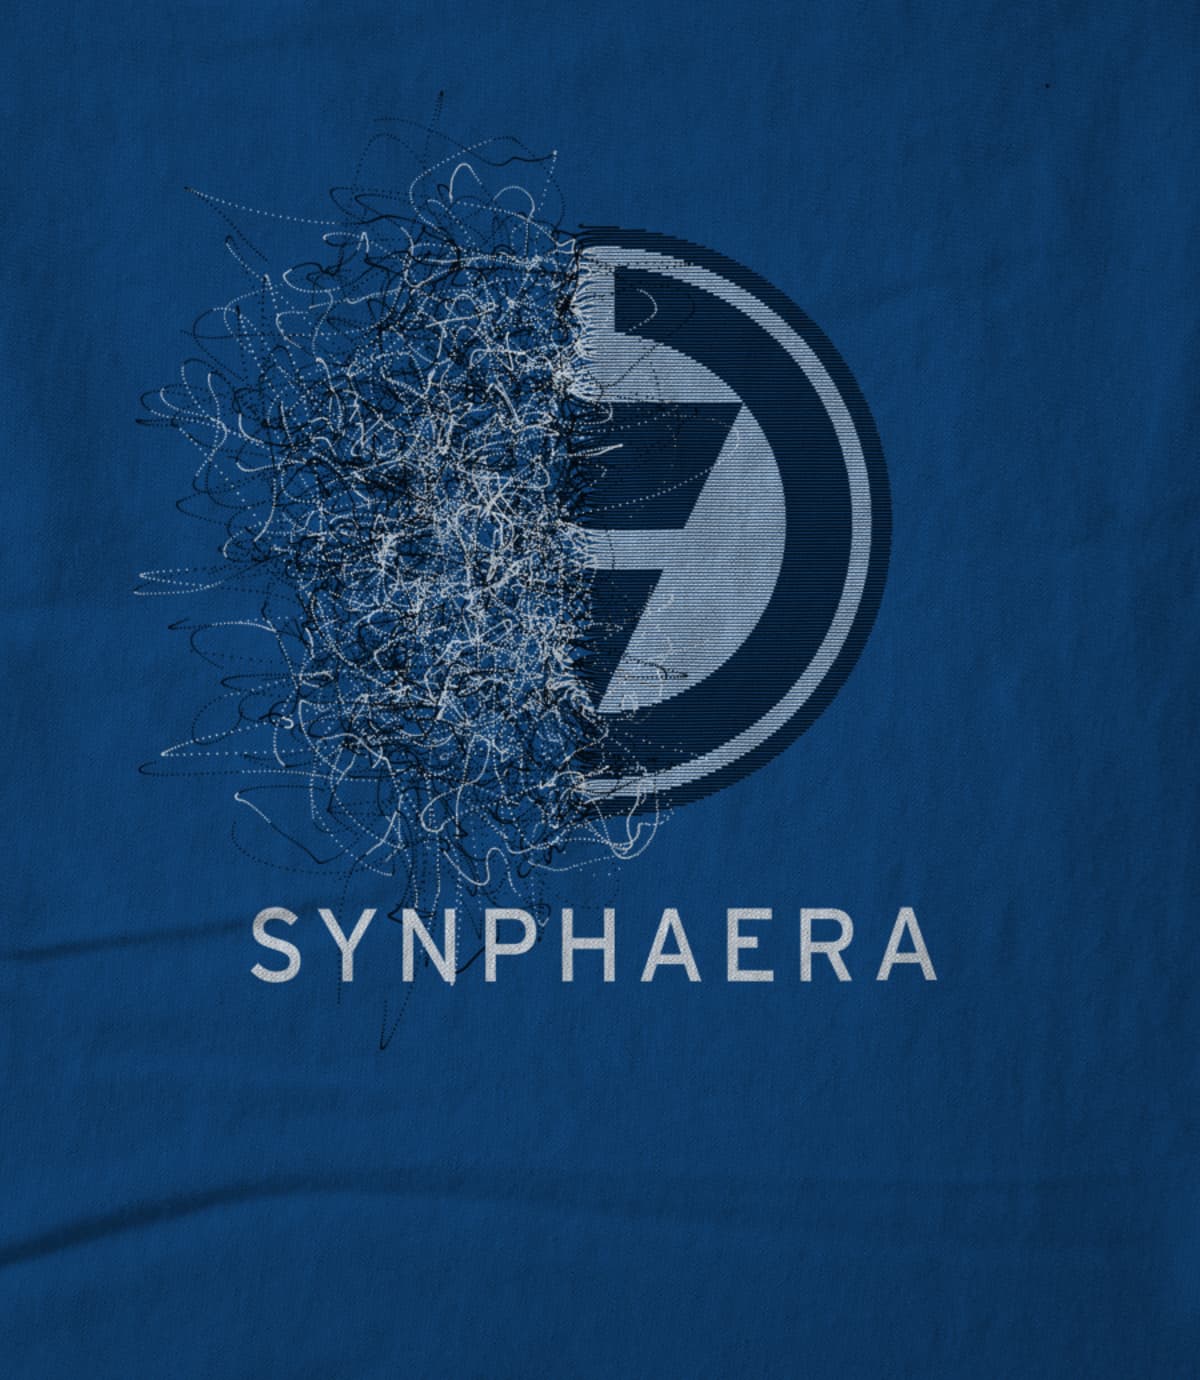 Synphaera synphaera new design 7 1521850308 gg91jm